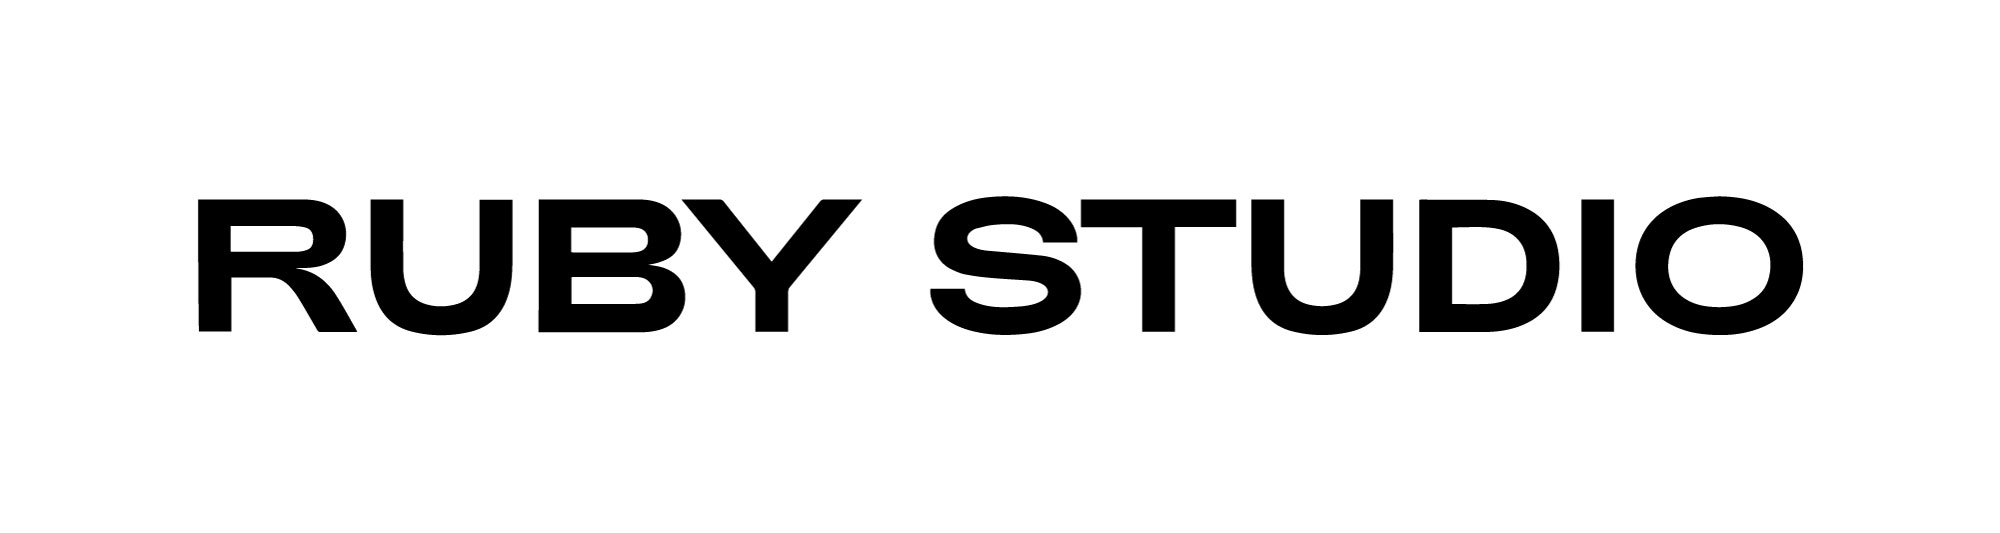 7. Ruby Studio